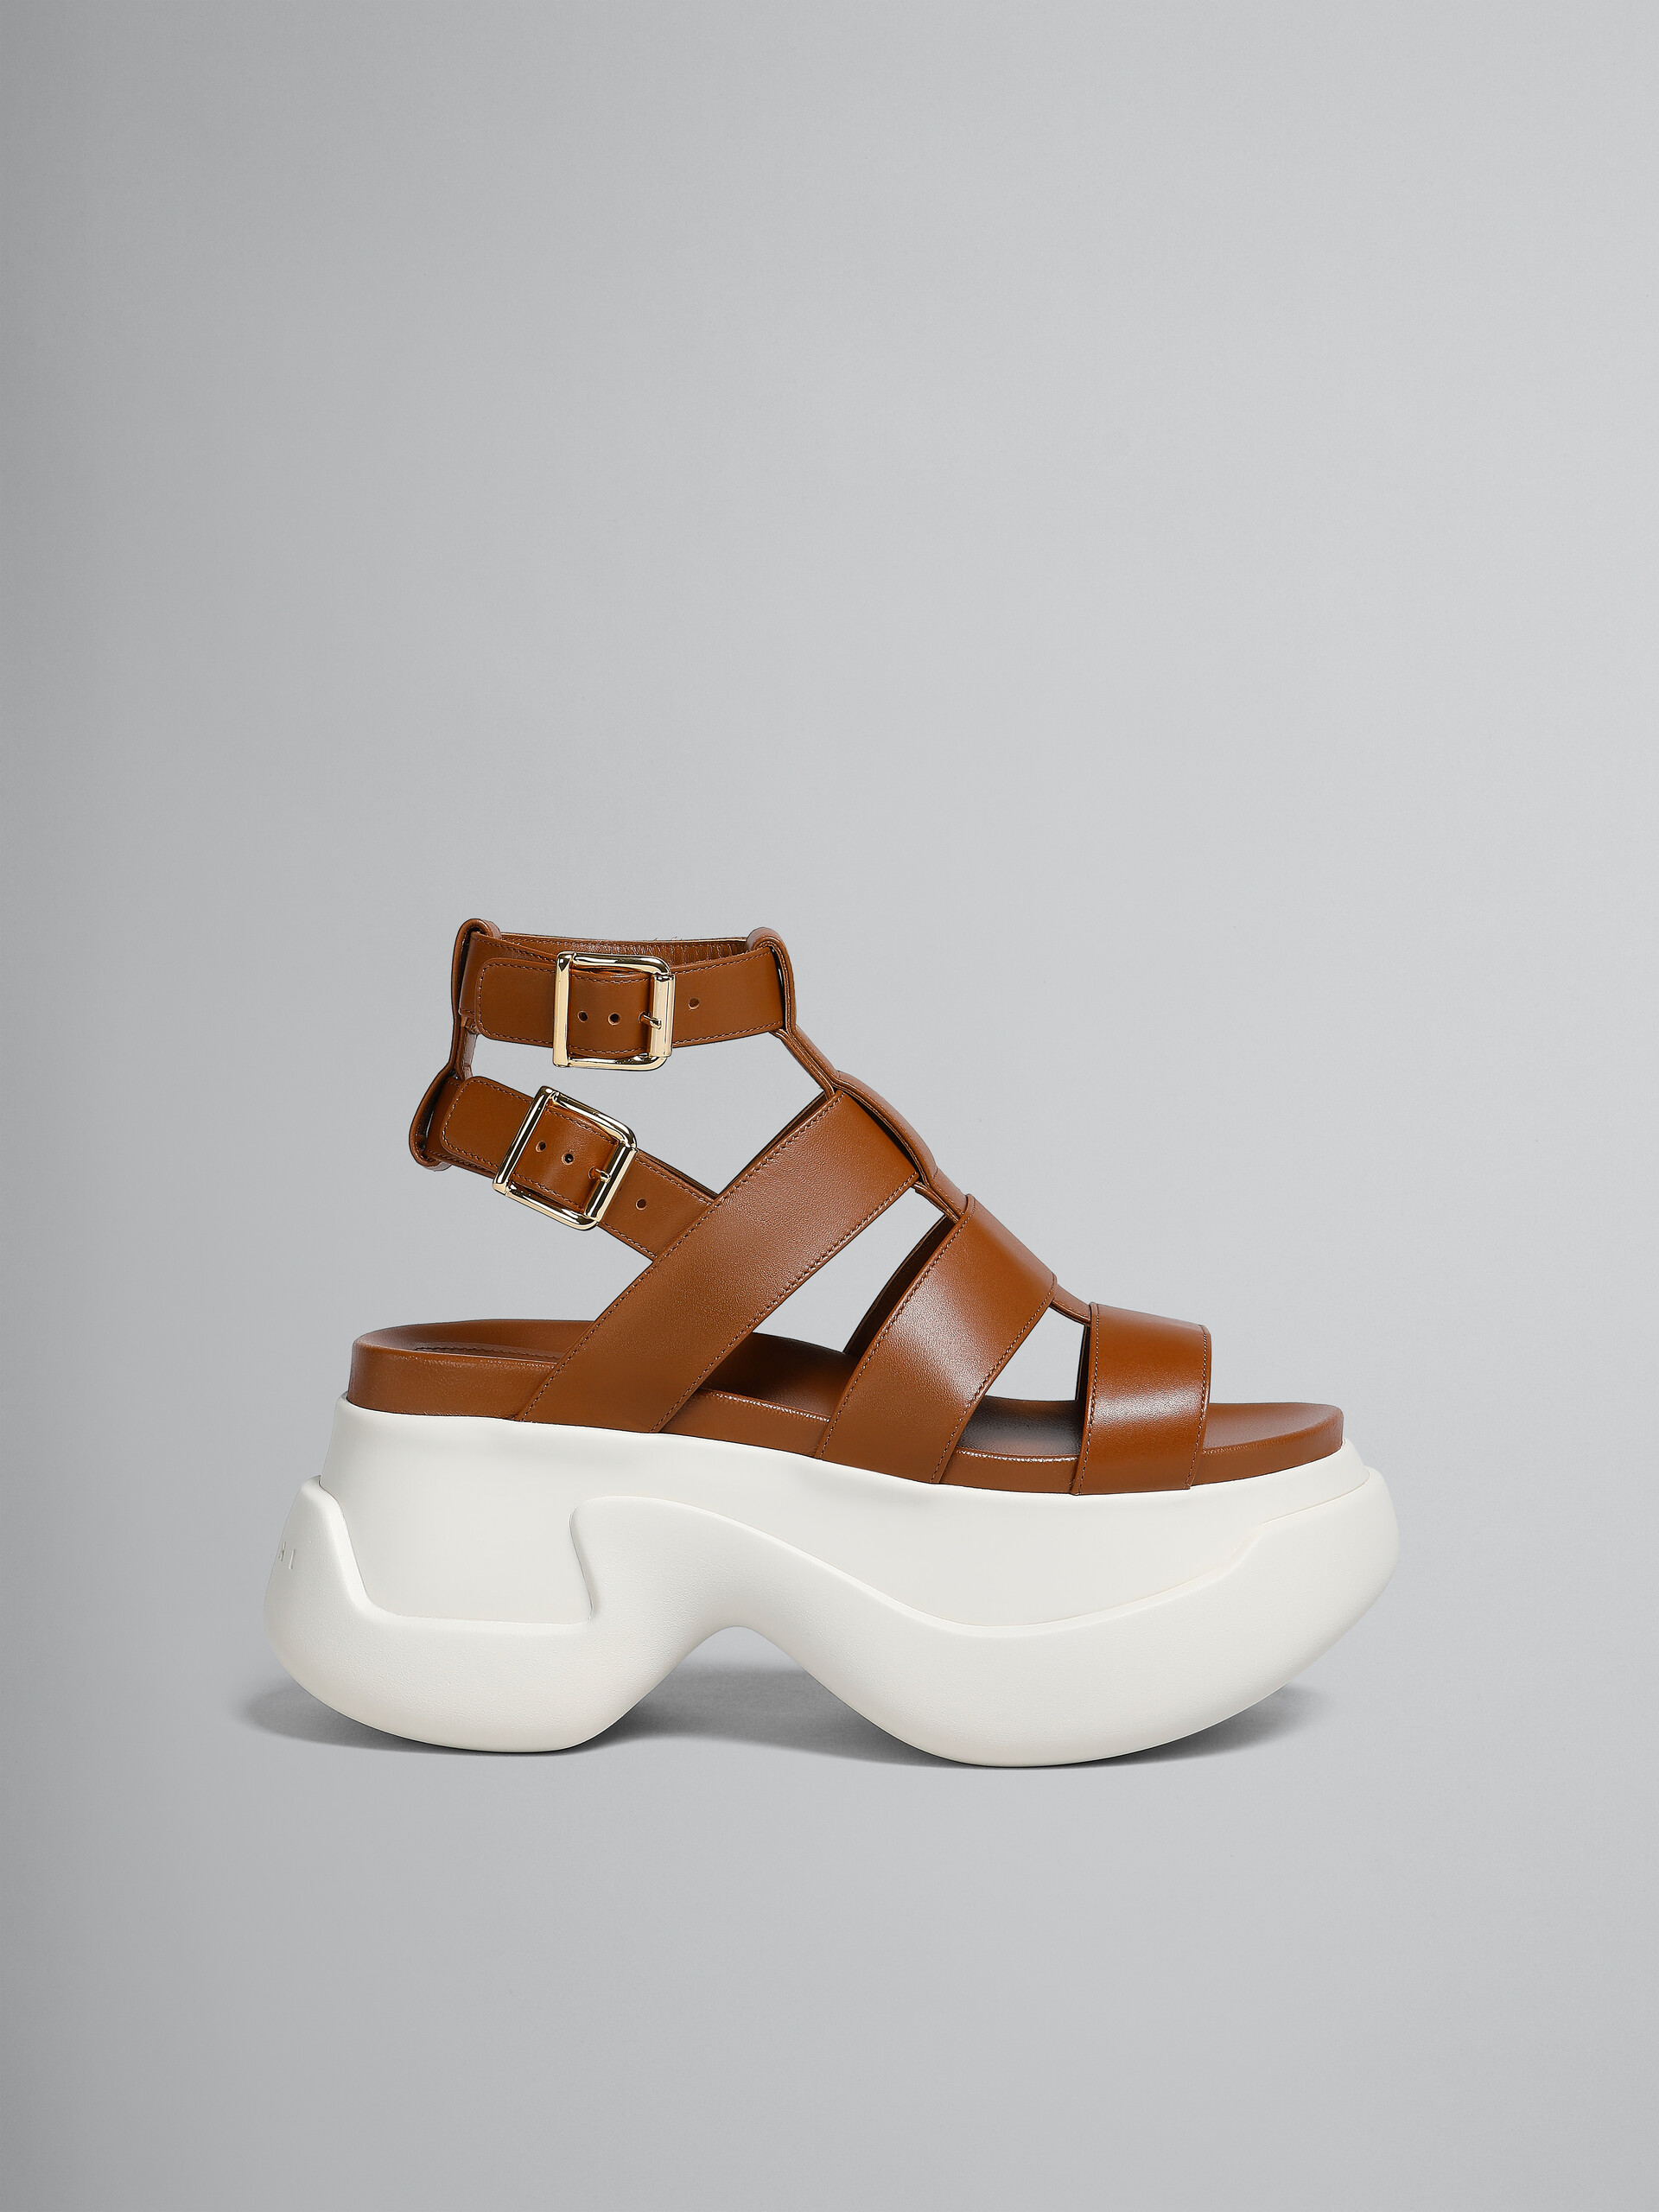 Brown leather Aras 23 gladiator sandal - Sandals - Image 1